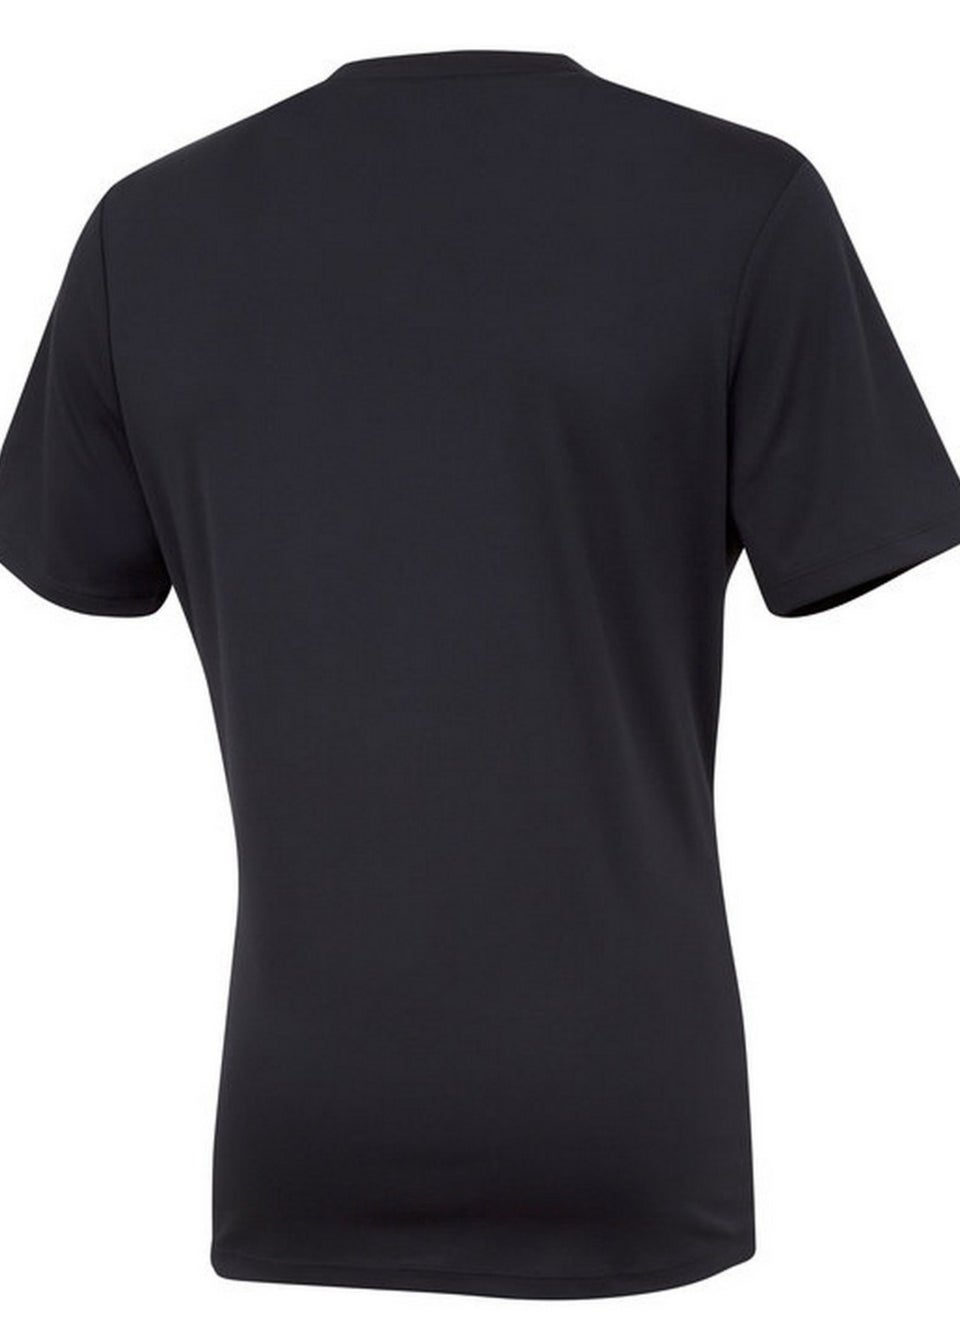 Umbro Black Club Short-Sleeved Jersey